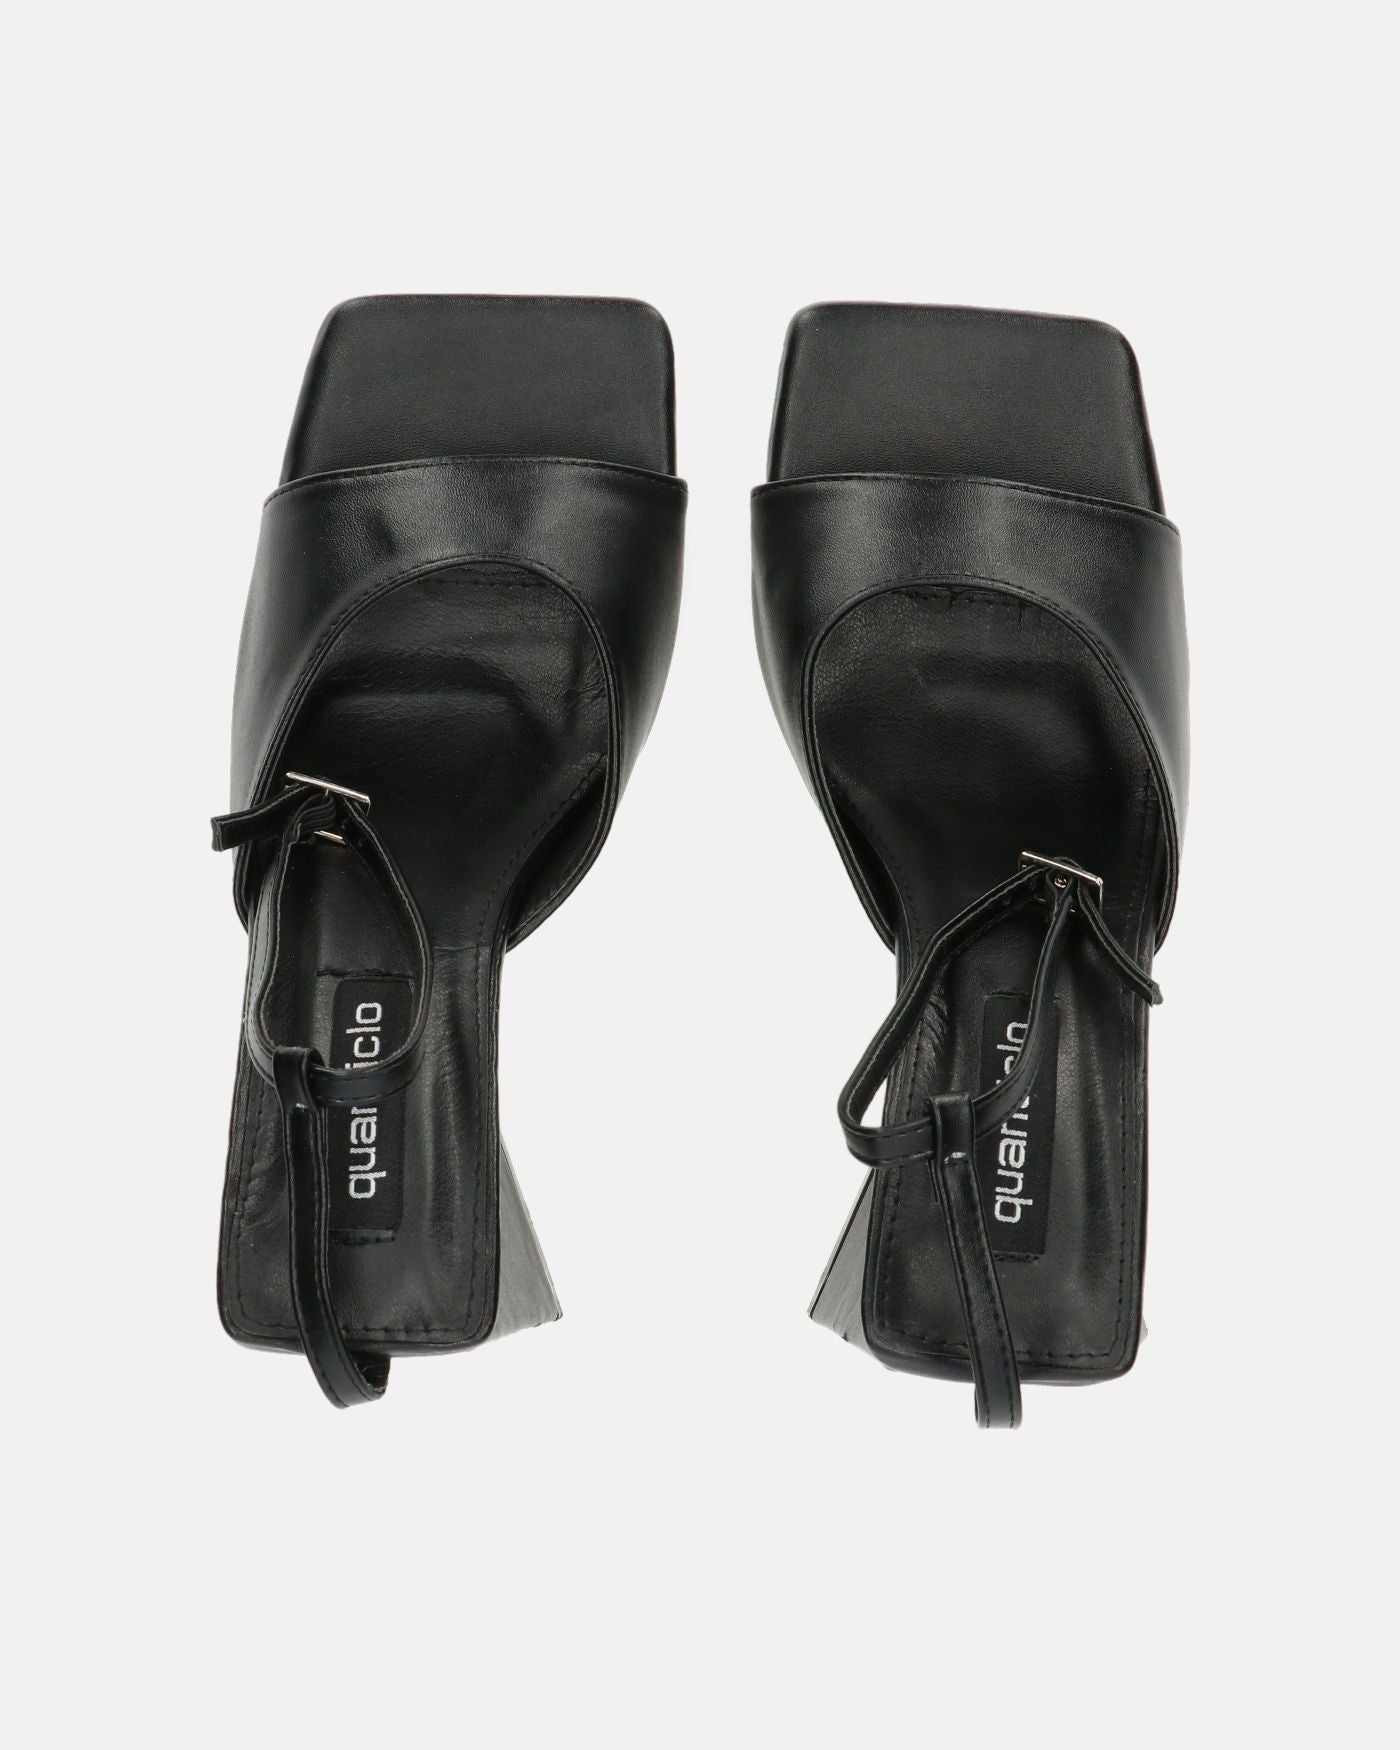 KUBRA - sandali con cinturino in ecopelle nera